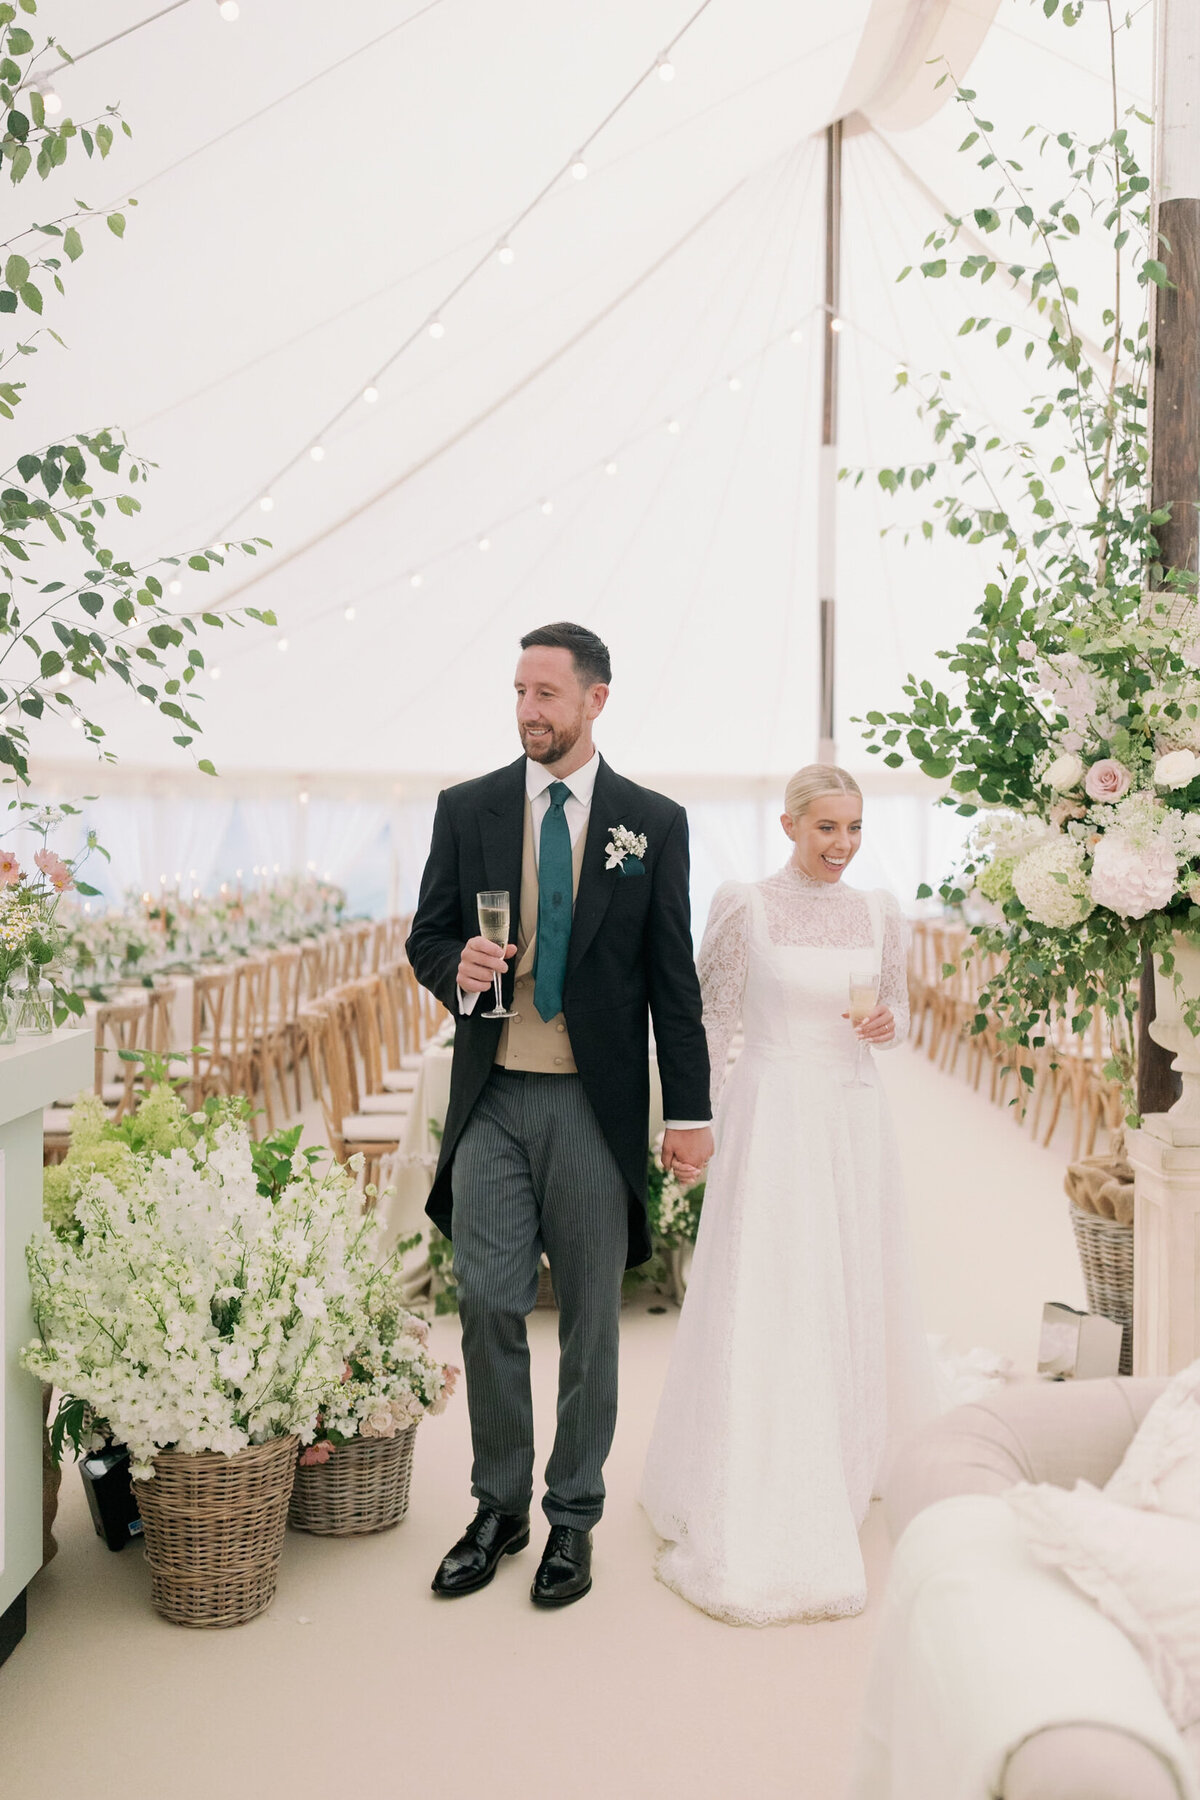 Attabara Studio UK Luxury Wedding Planners | Norfolk Marquee wedding with Camilla Joy Photography988